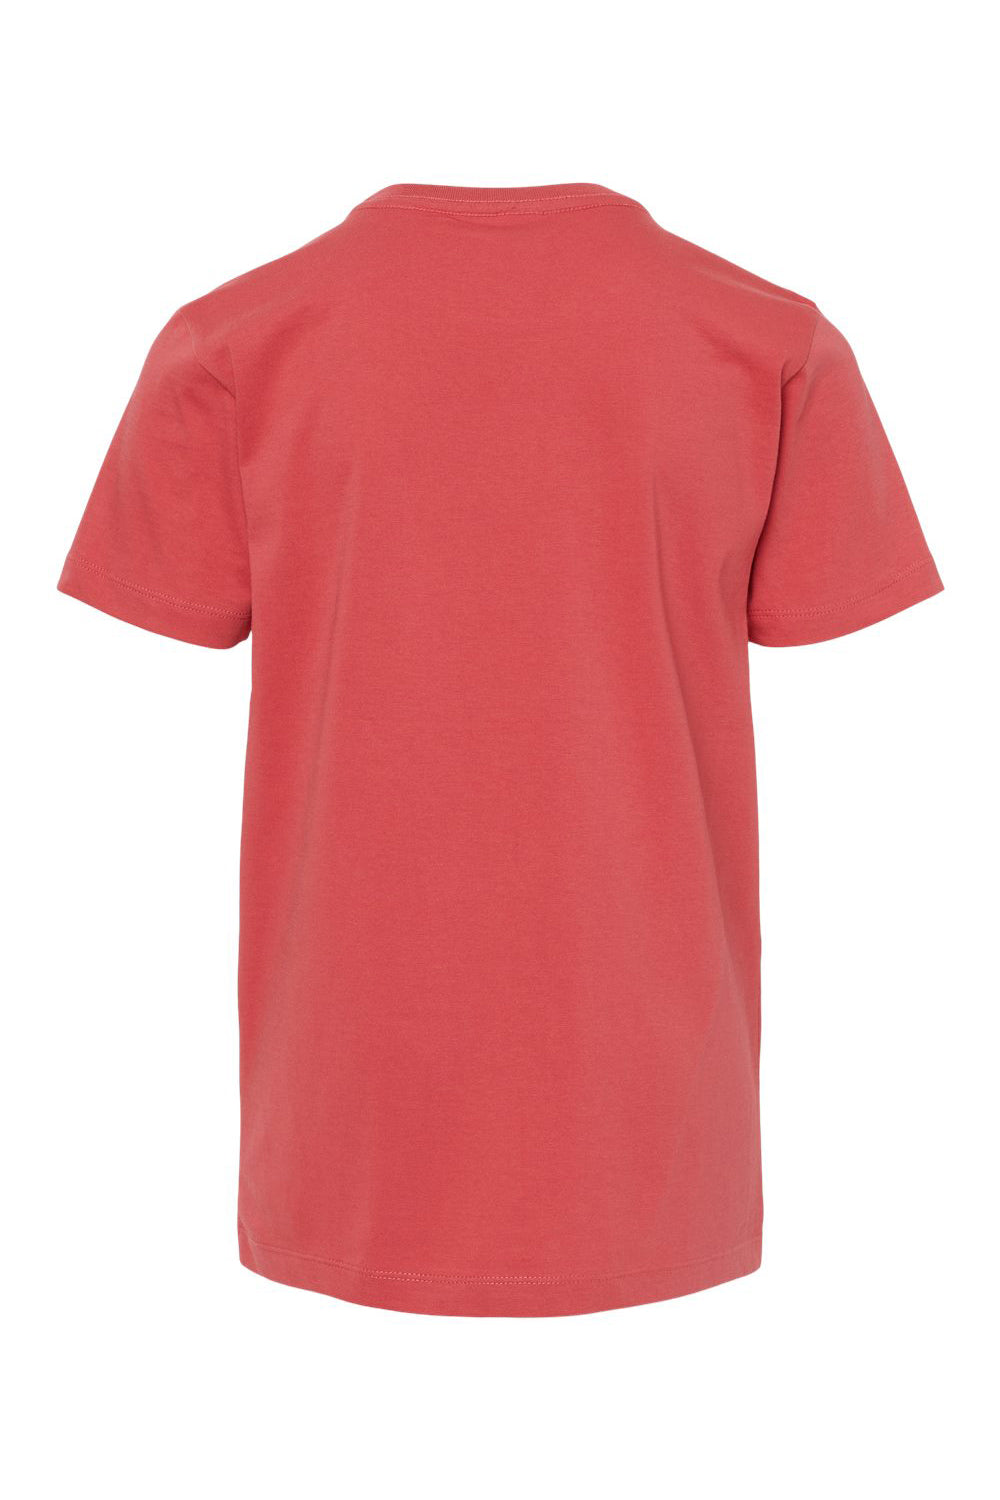 SoftShirts 402 Youth Organic Short Sleeve Crewneck T-Shirt Brick Flat Back